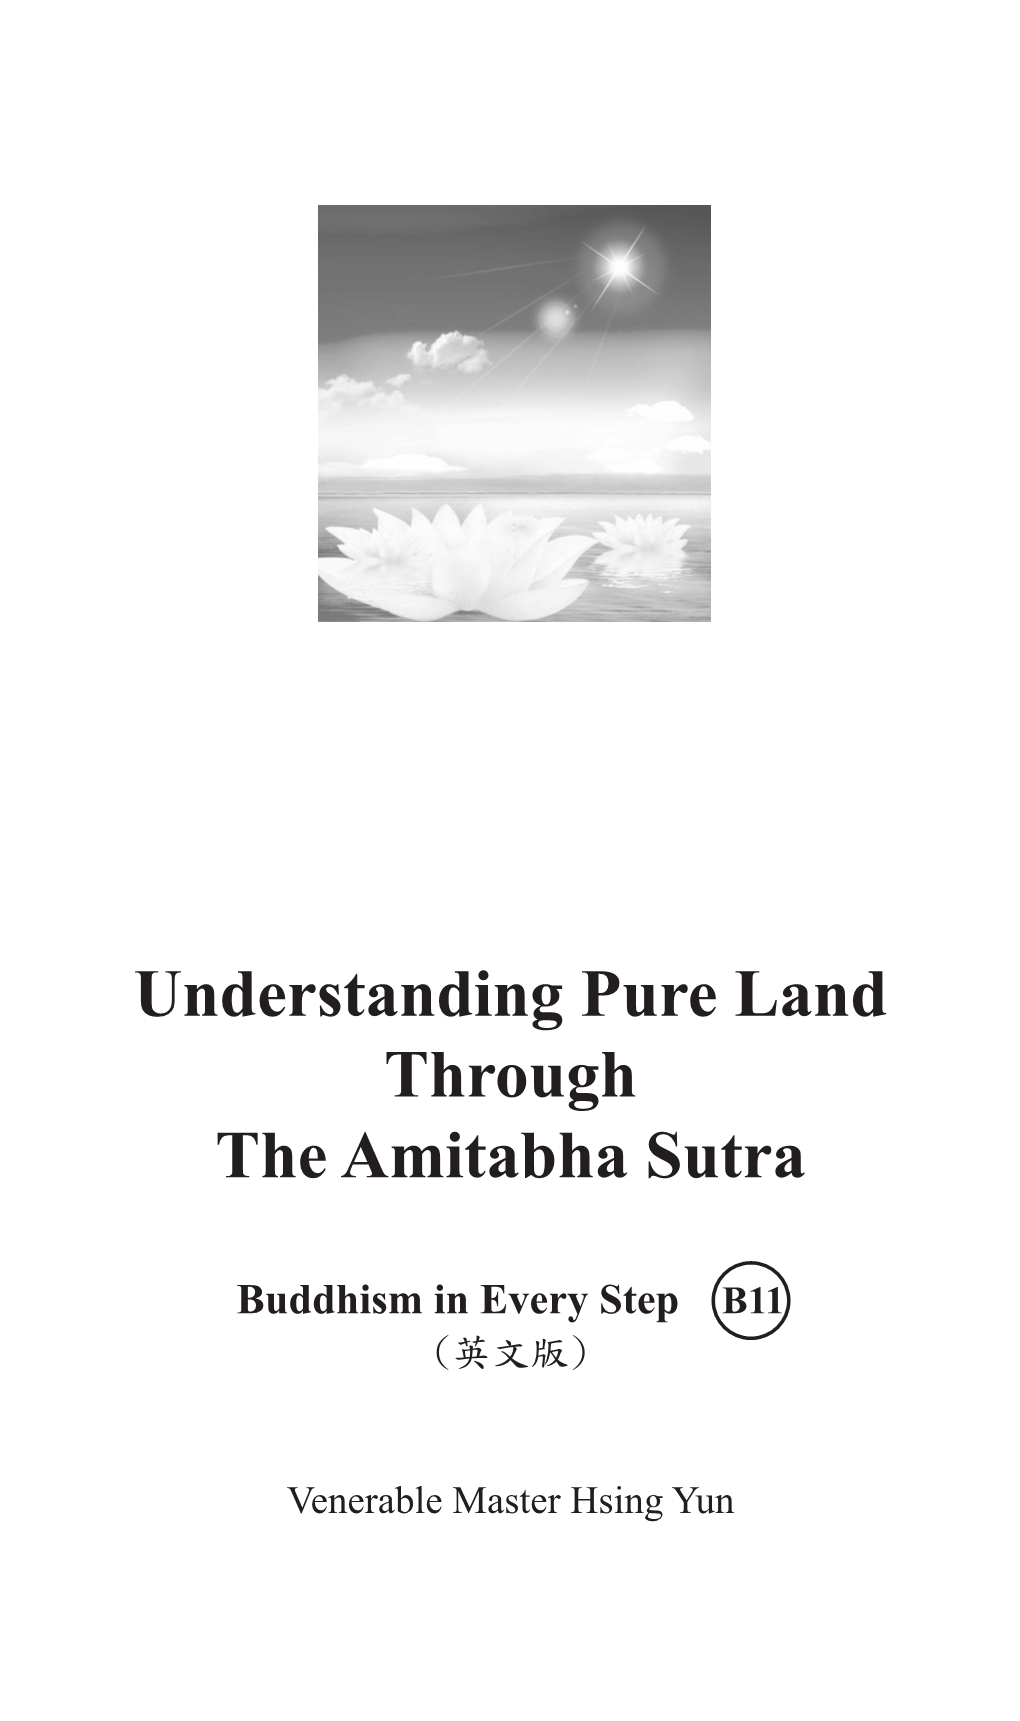 Understanding Pure Land Through the Amitabha Sutra